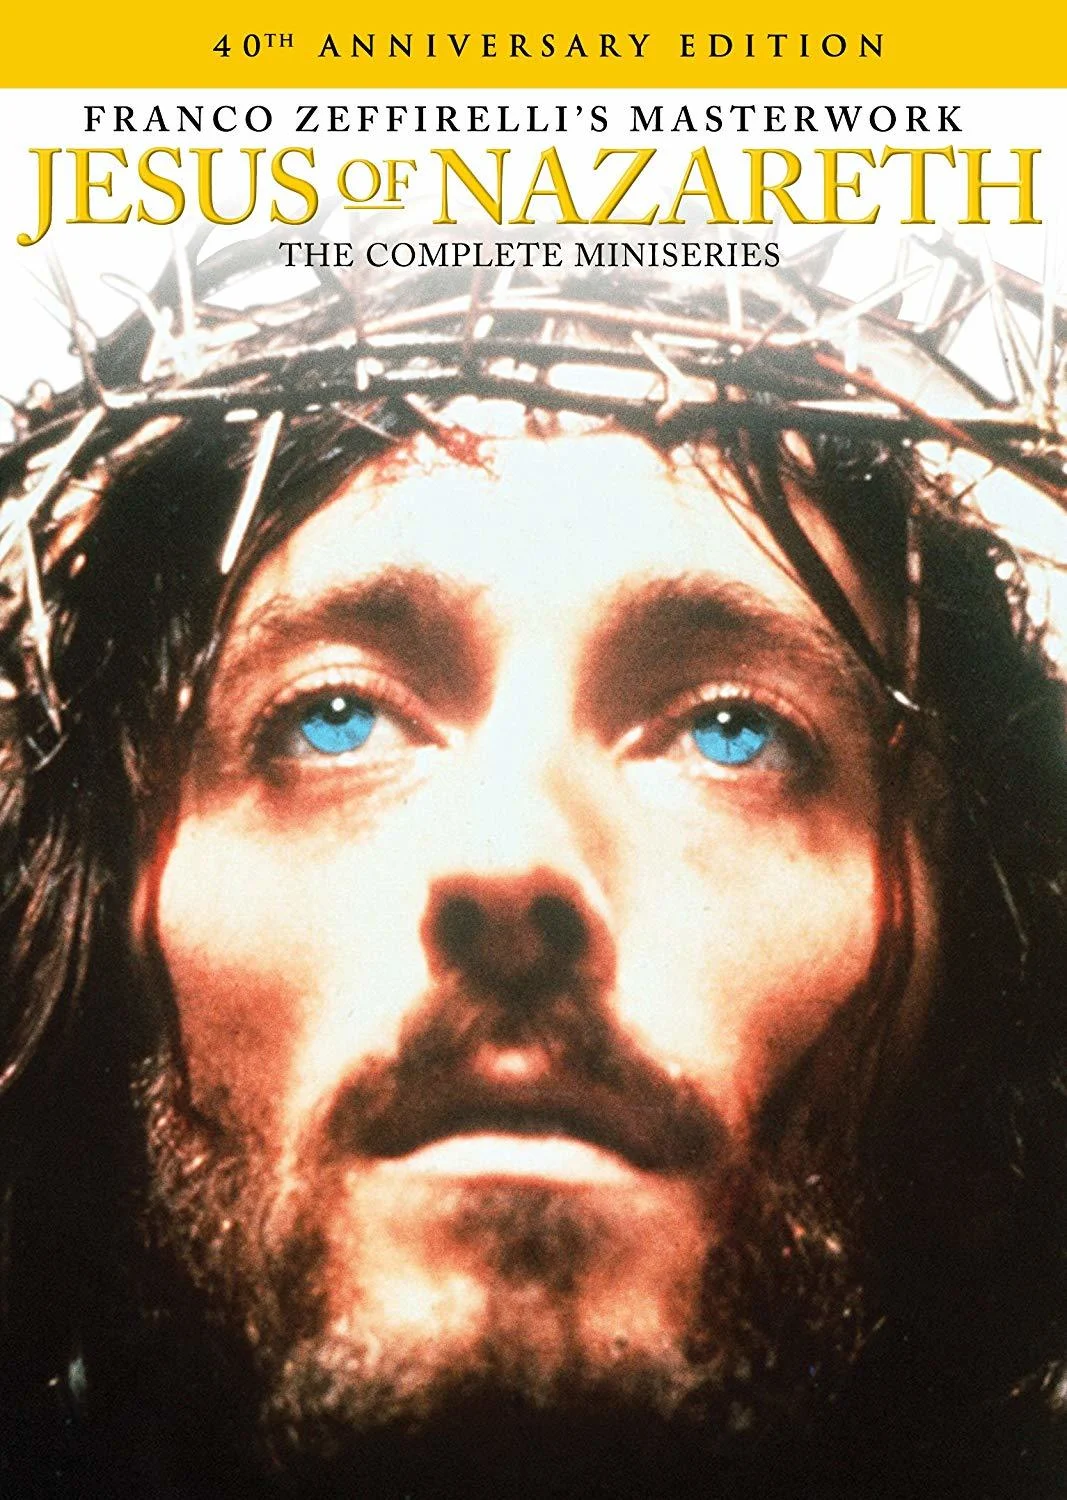 Jesus of Nazareth: 40th Anniversary Edition (DVD)